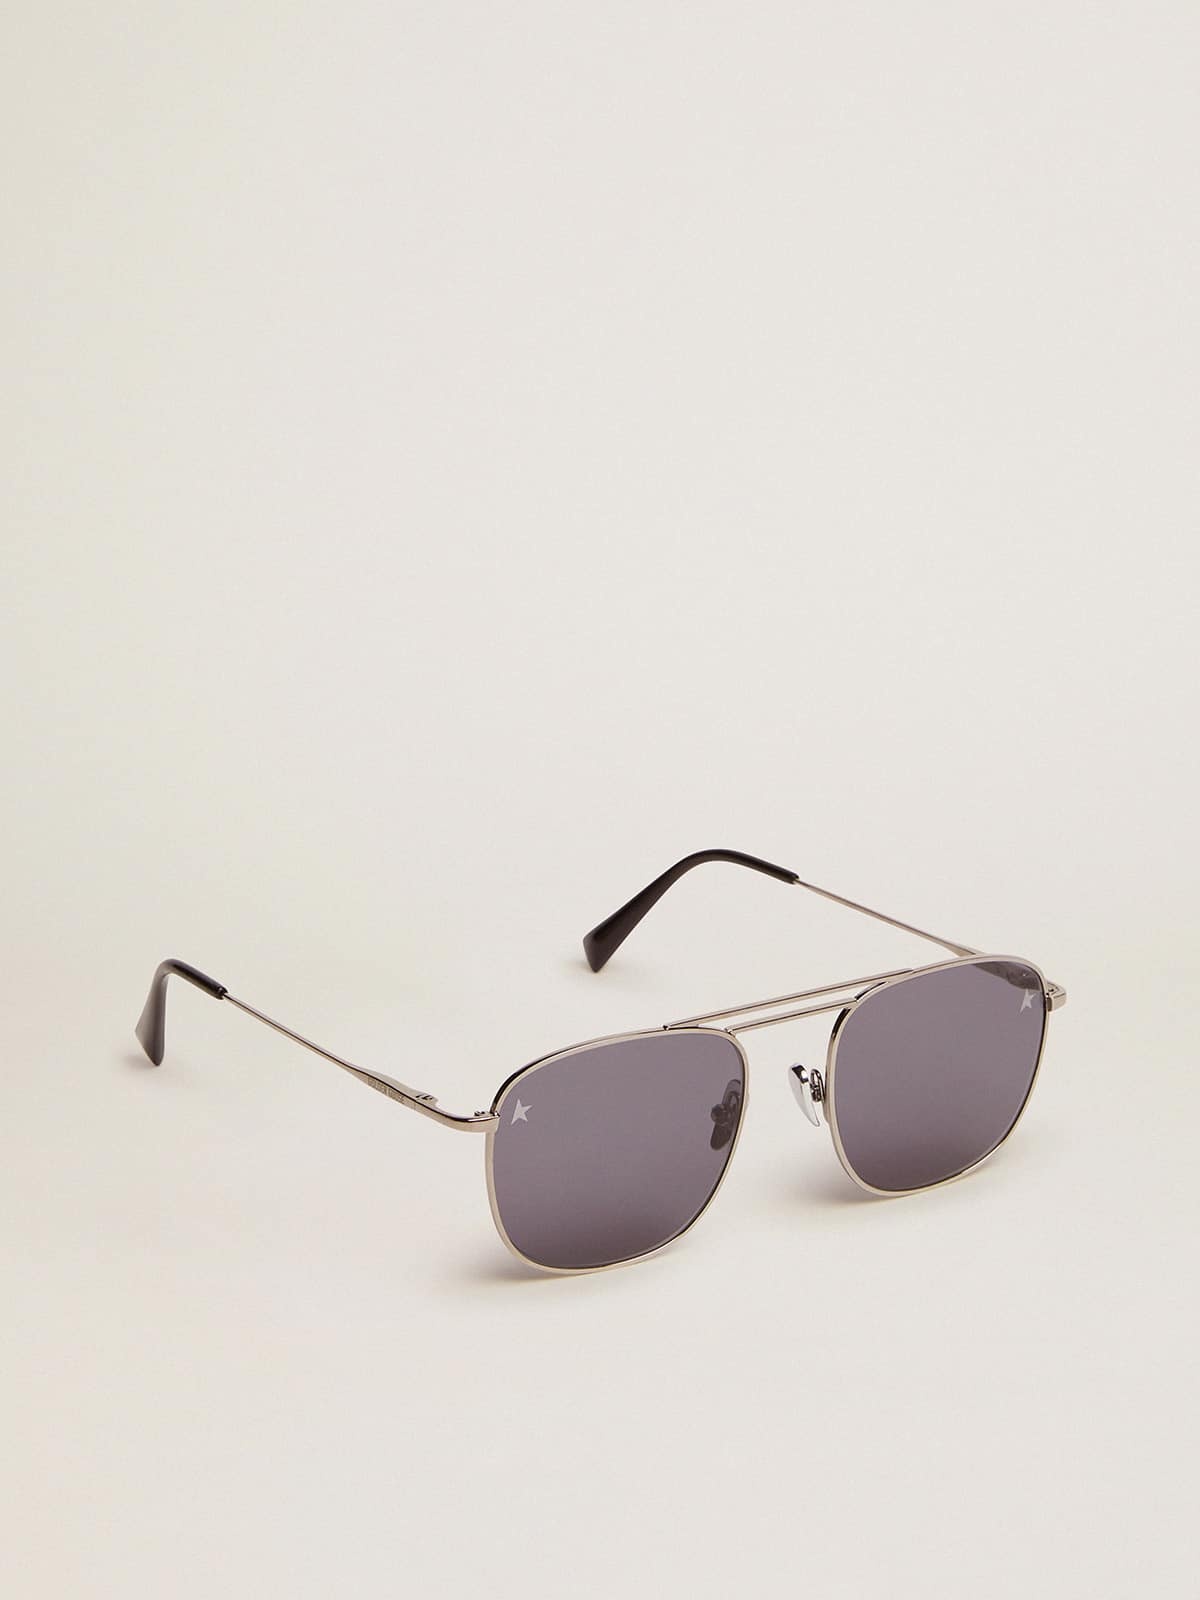 Roger aviator sunglasses with black frame and black lenses - 1